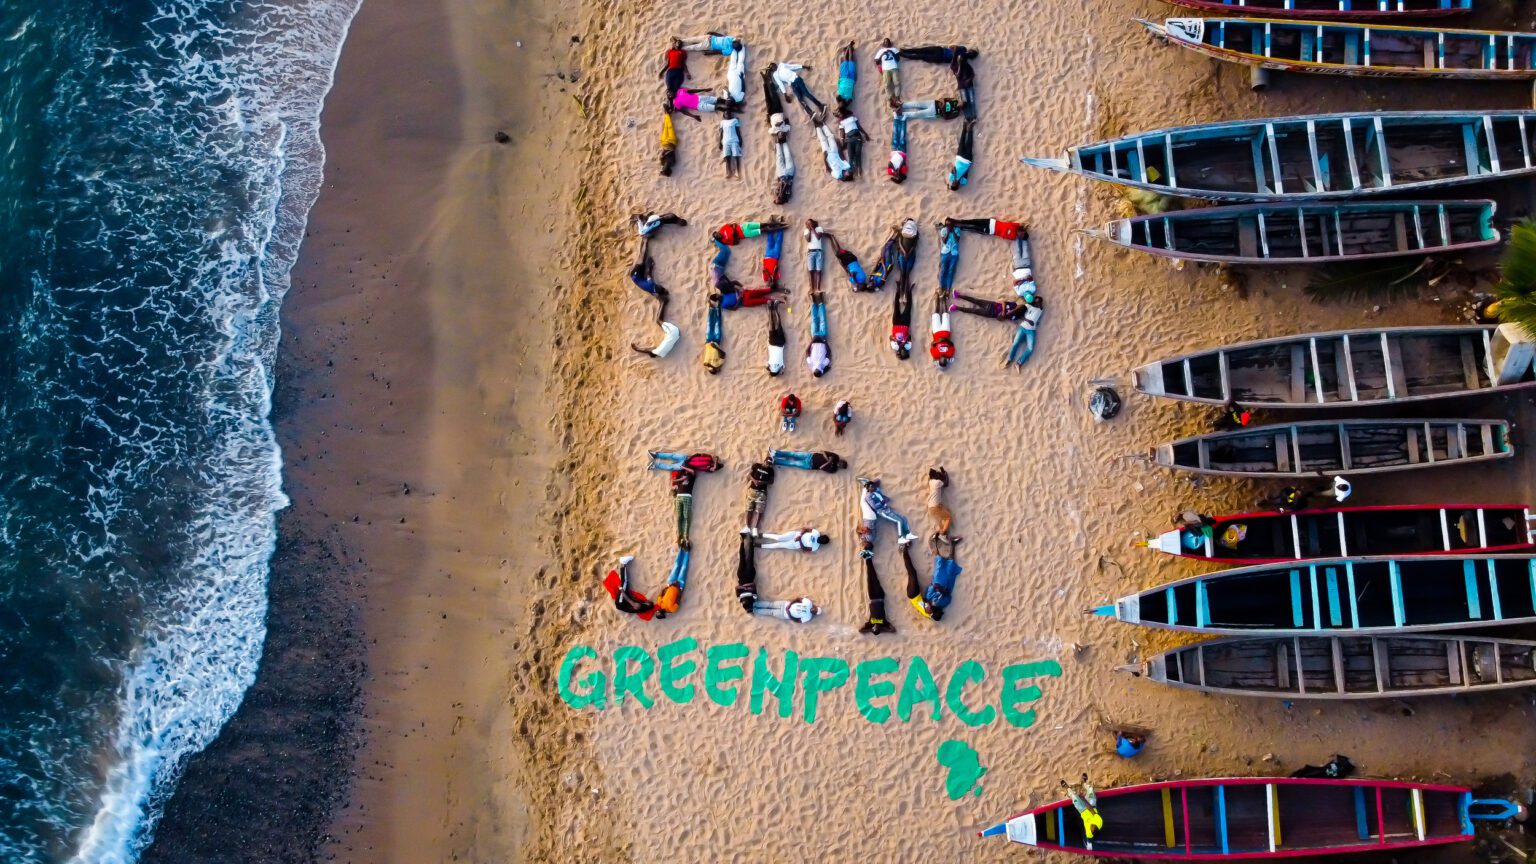 Miembros de una comunidad pesquera en Senegal se unen a un artista local para crear una pancarta humana que dice “Ana Sama Jën” (“¿Dónde está mi pescado?”). © Mbaye Ndir / Greenpeace